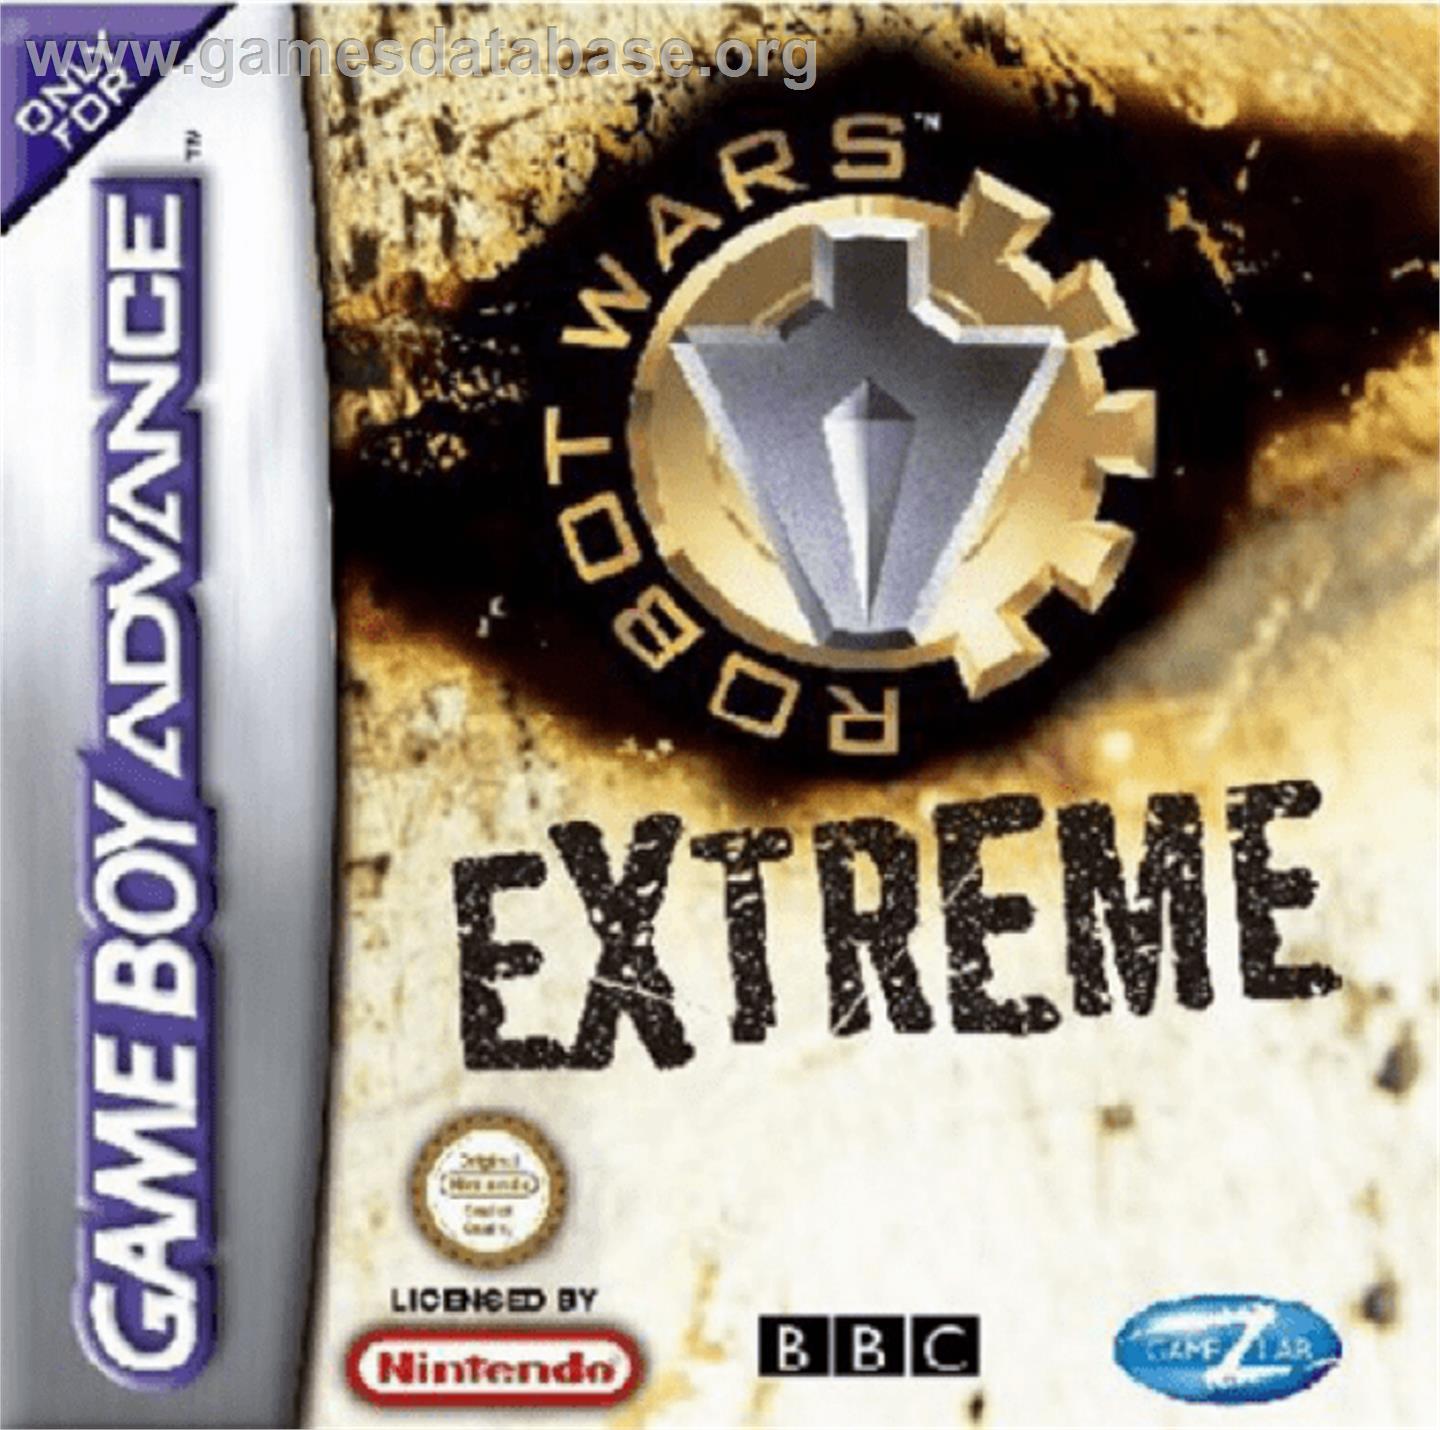 Robot Wars 2: Extreme Destruction - Nintendo Game Boy Advance - Artwork - Box